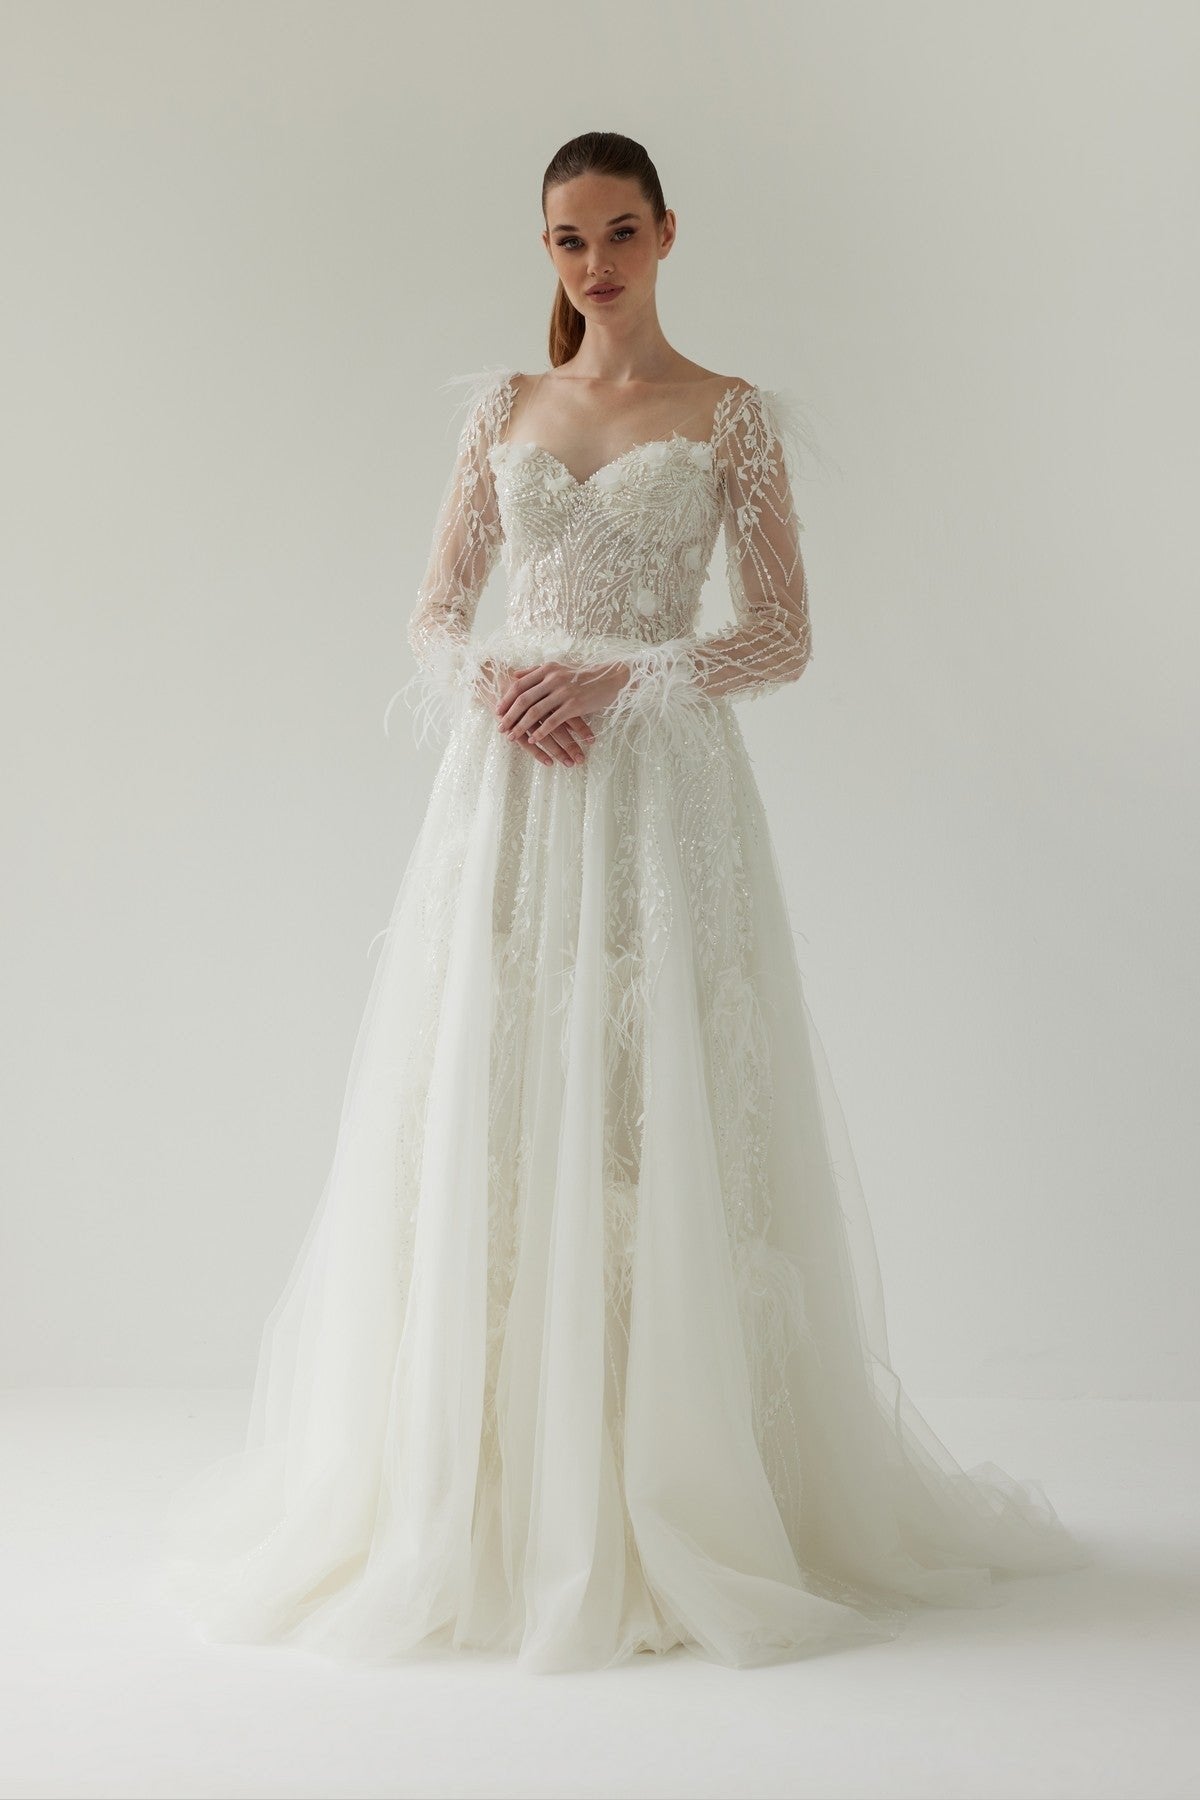 Long-Sleeved, Sweetheart Neckline Helen Wedding Dress with Otrisch Detail